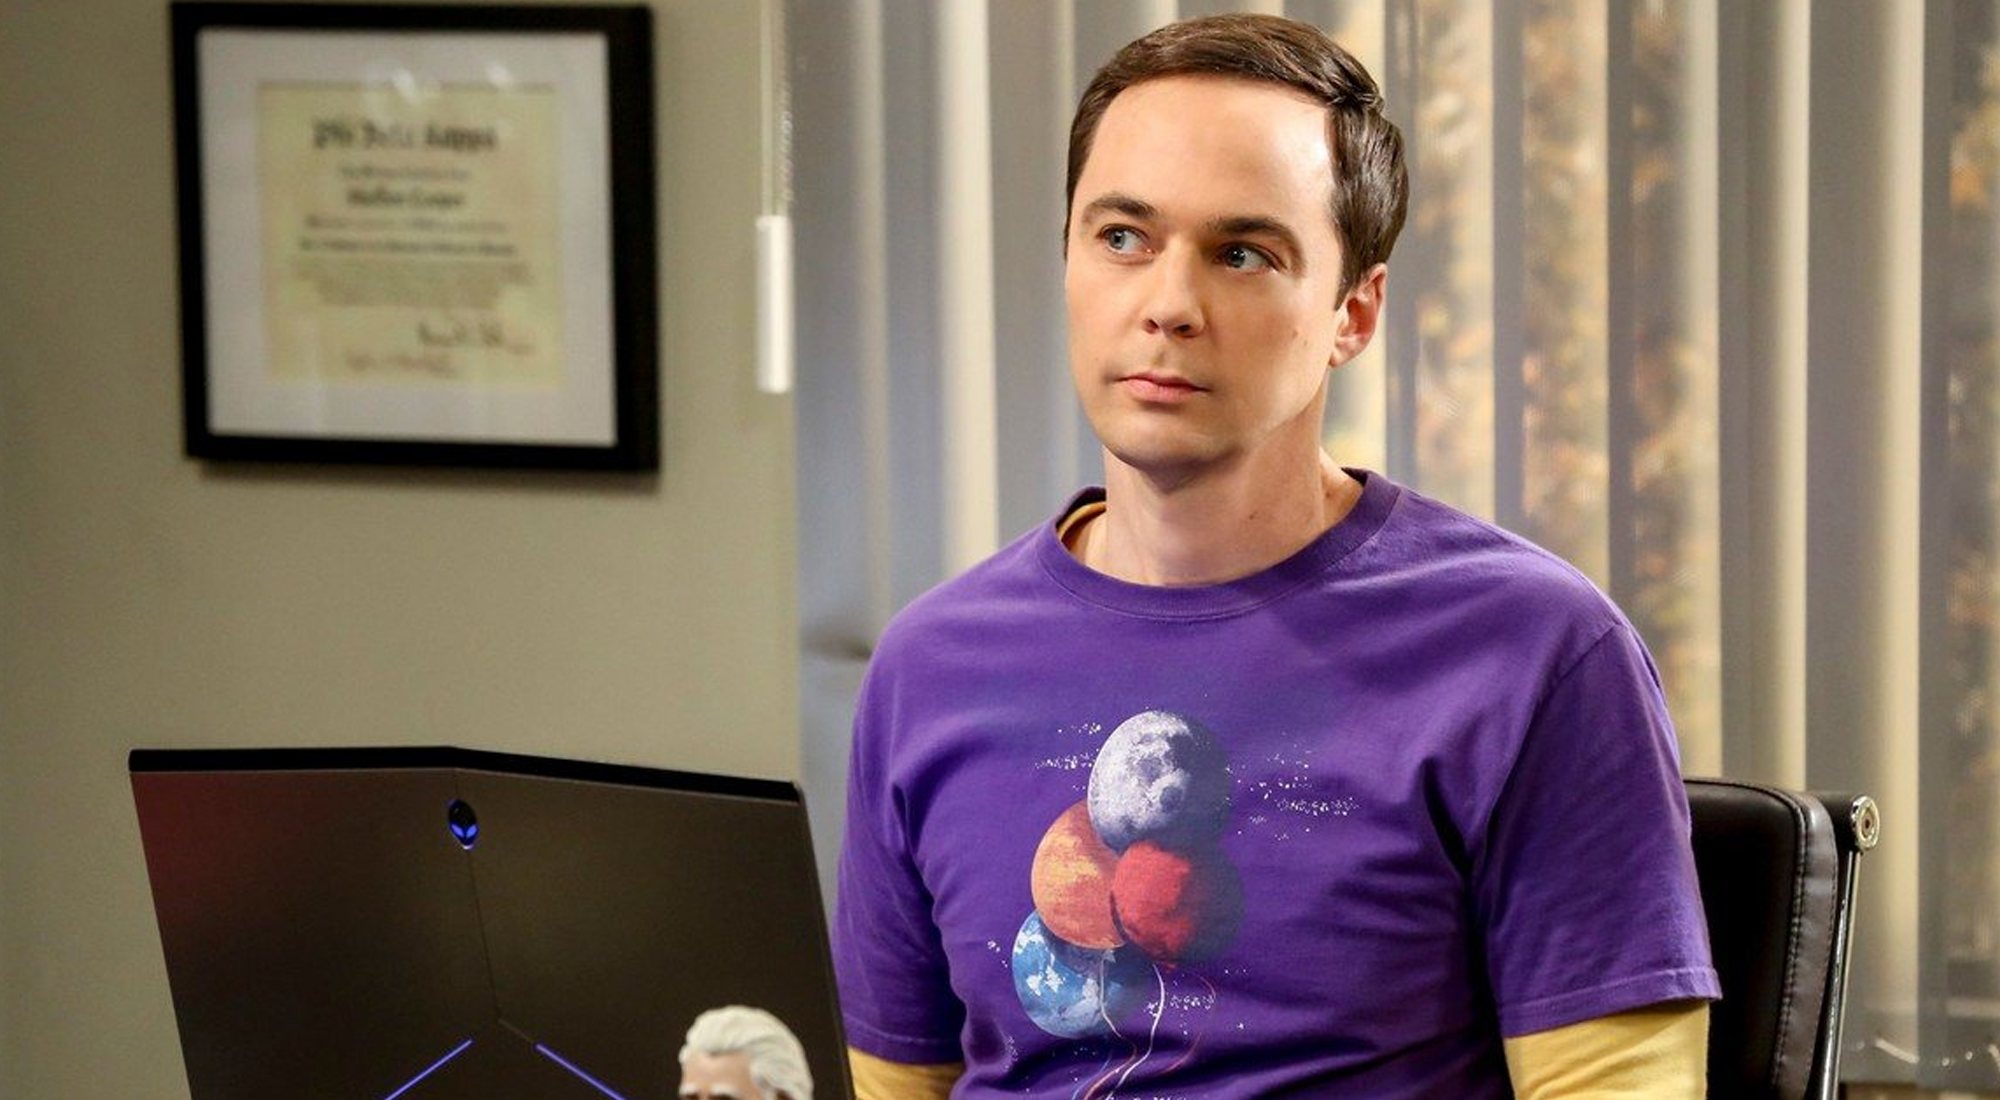 Jim Parsons en 'The Big Bang Theory'